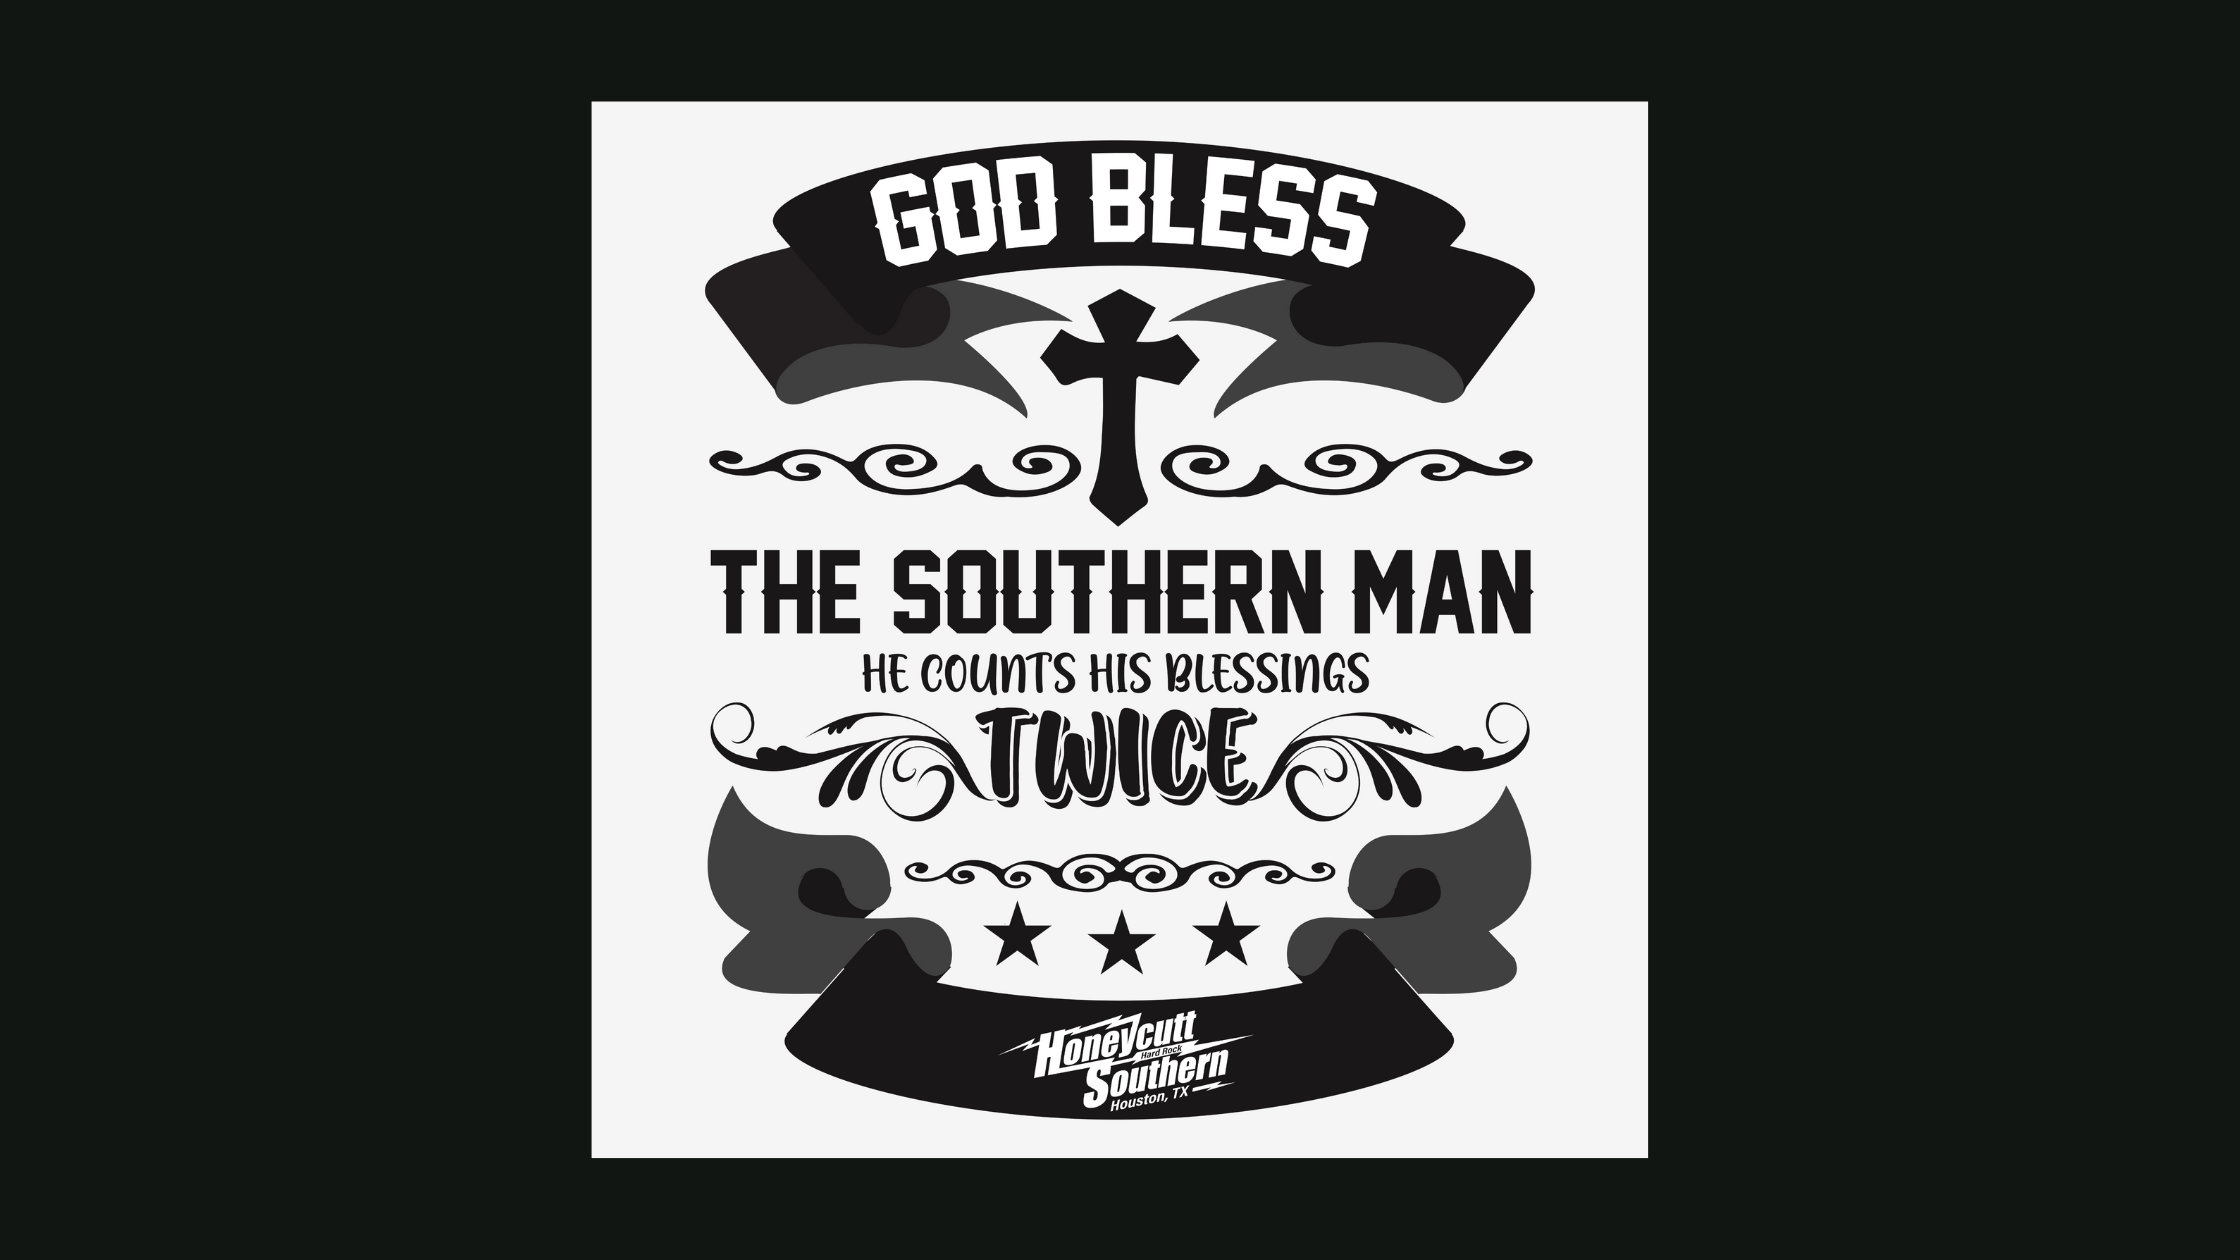 God Bless the Southern Man Honeycutt Southern Album Artwork